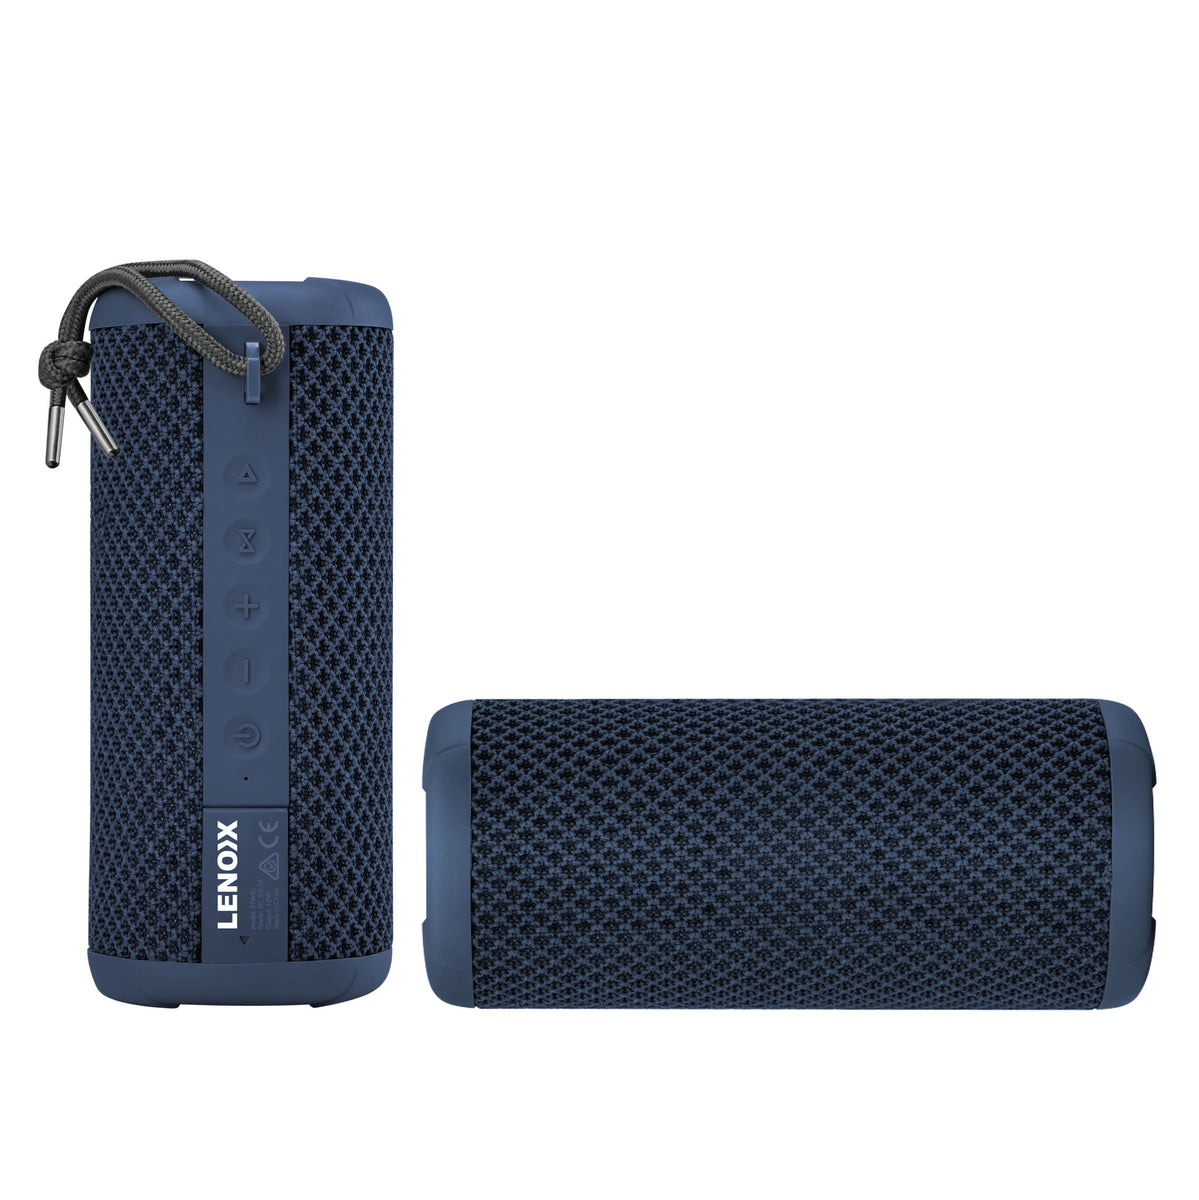 Blue portable bluetooth speaker with sleek control panel.